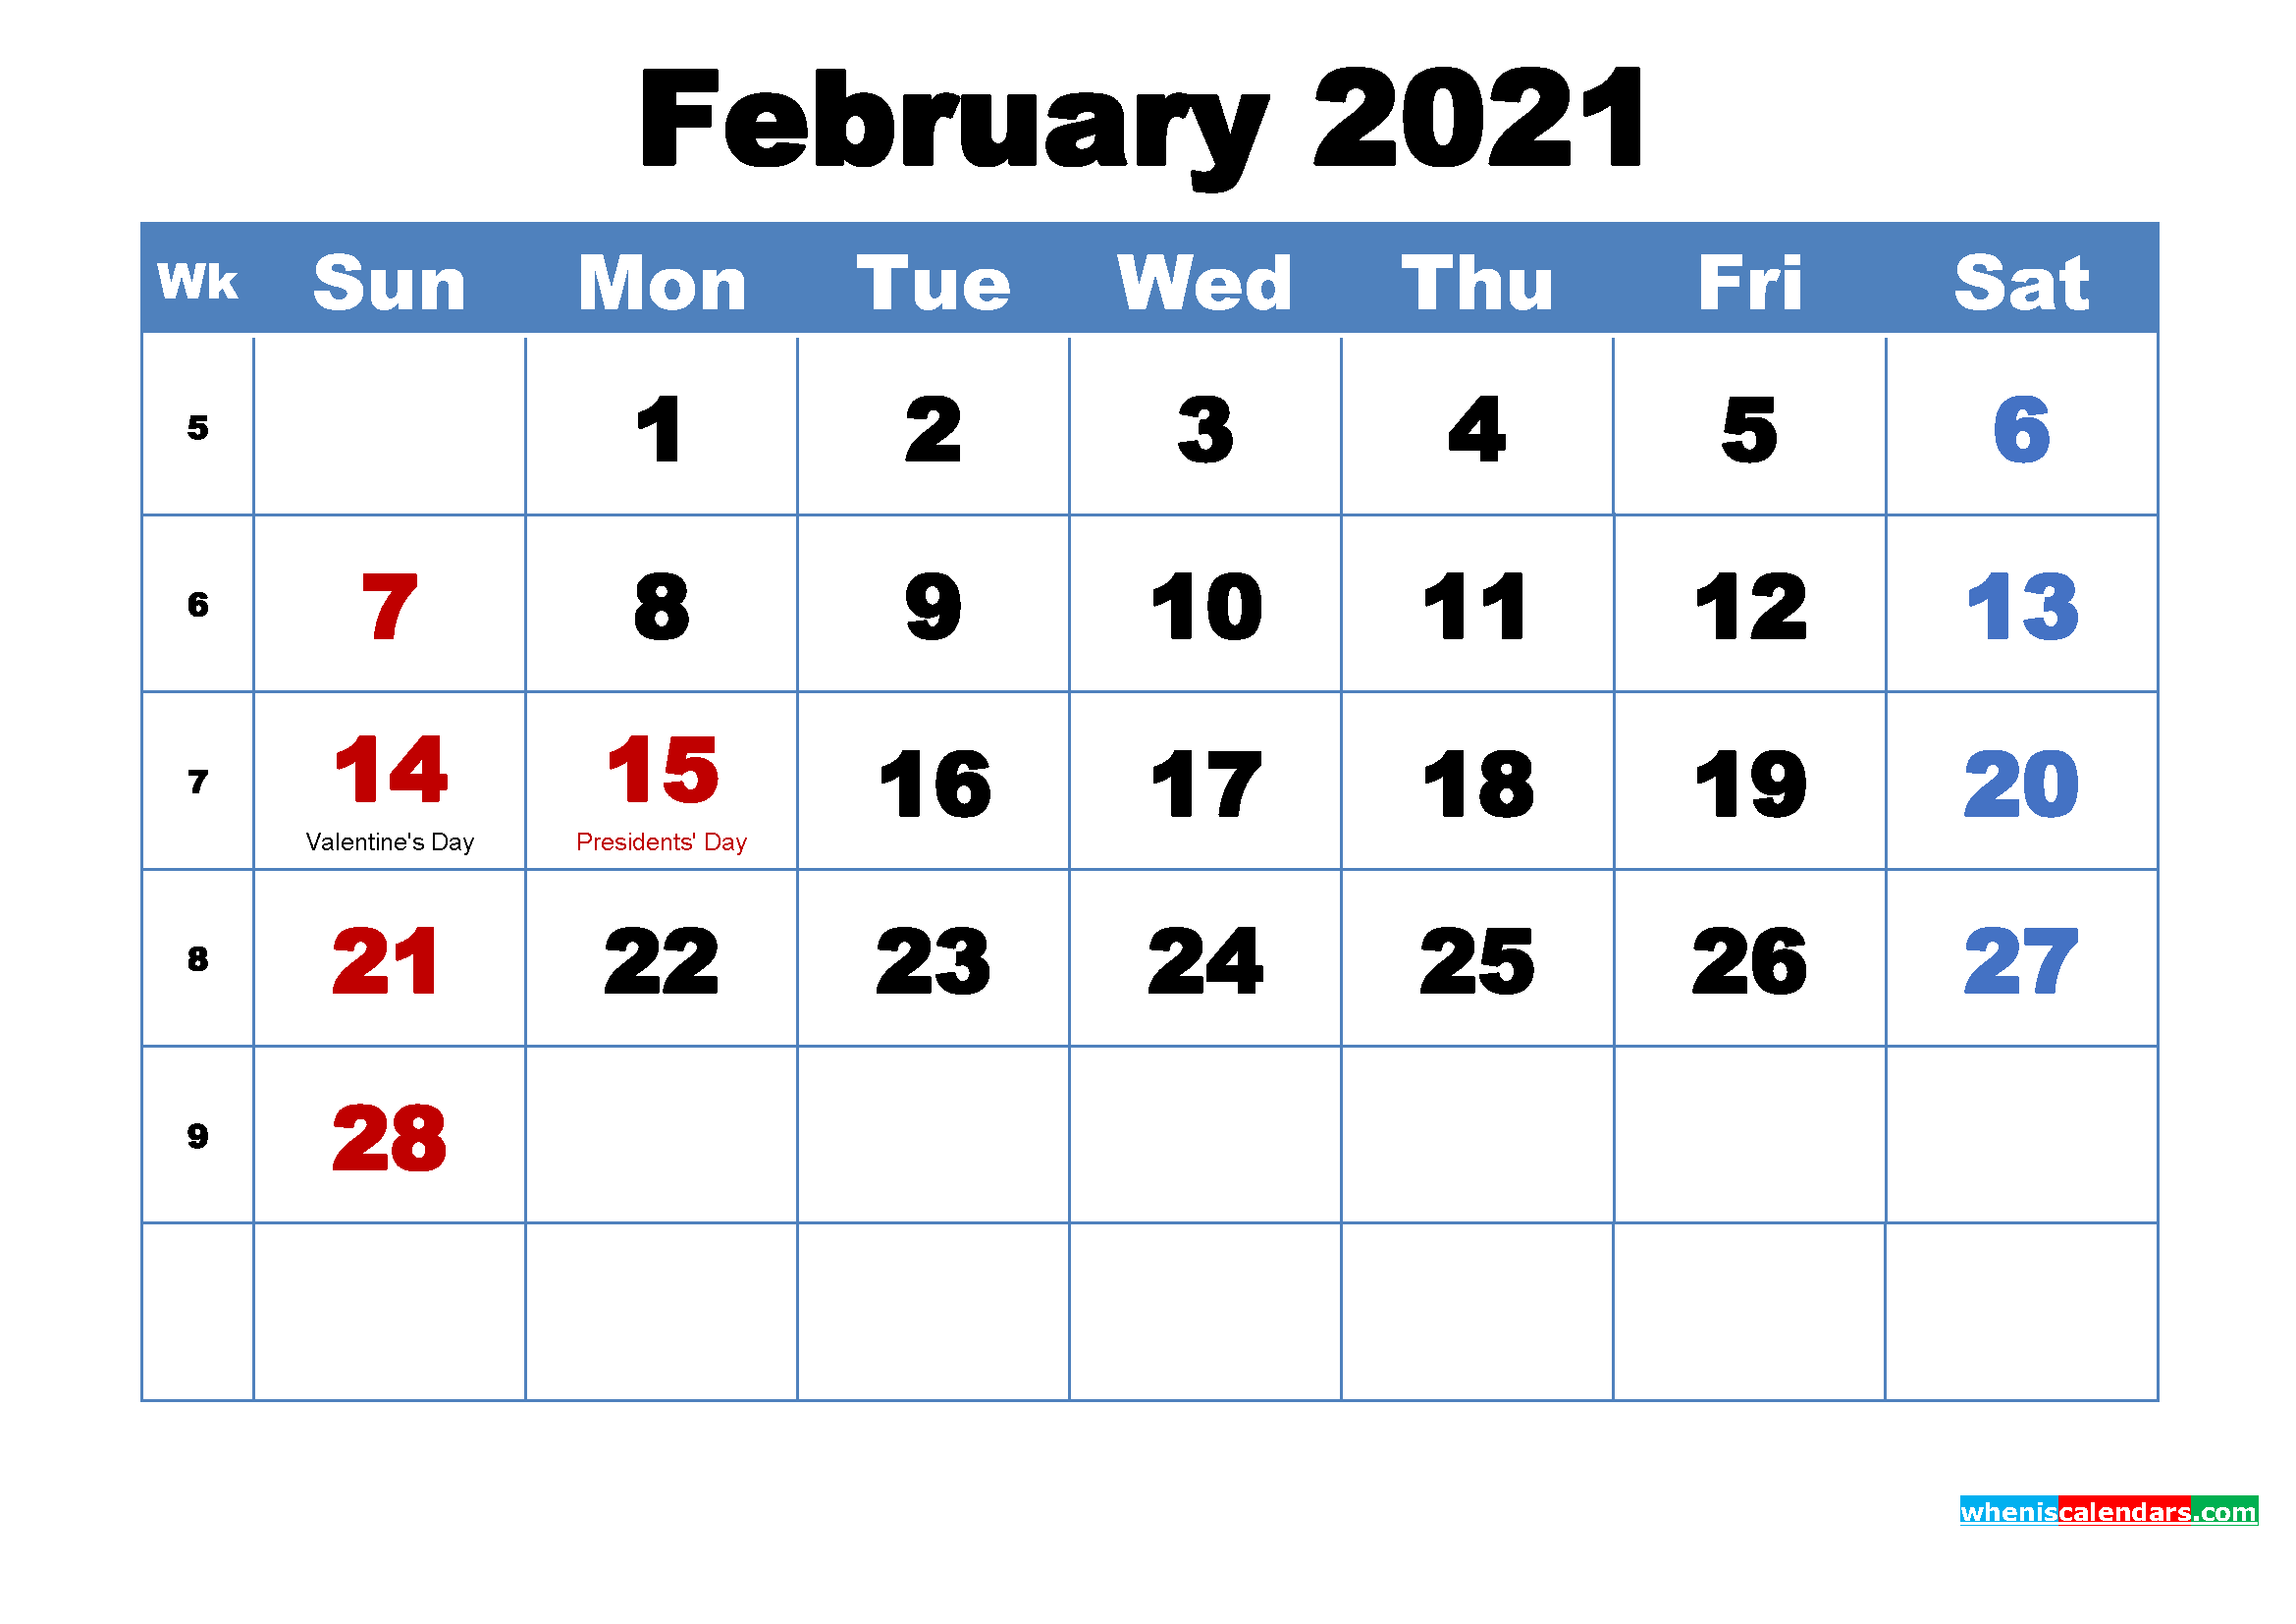 12 month 2021 february calendar 30 Free February 2021 Calendars For Home Or Office Onedesblog 12 month 2021 february calendar